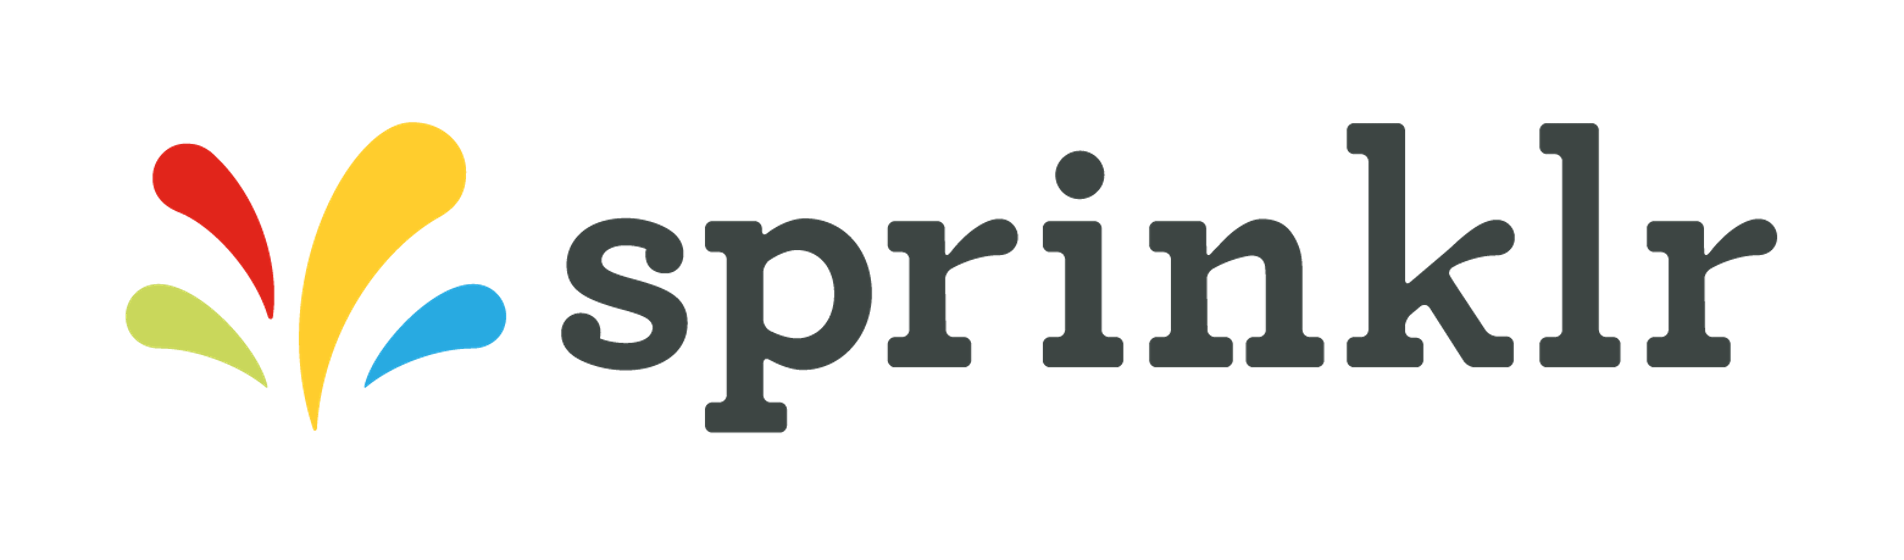 Martech-Sprinklr-Logo